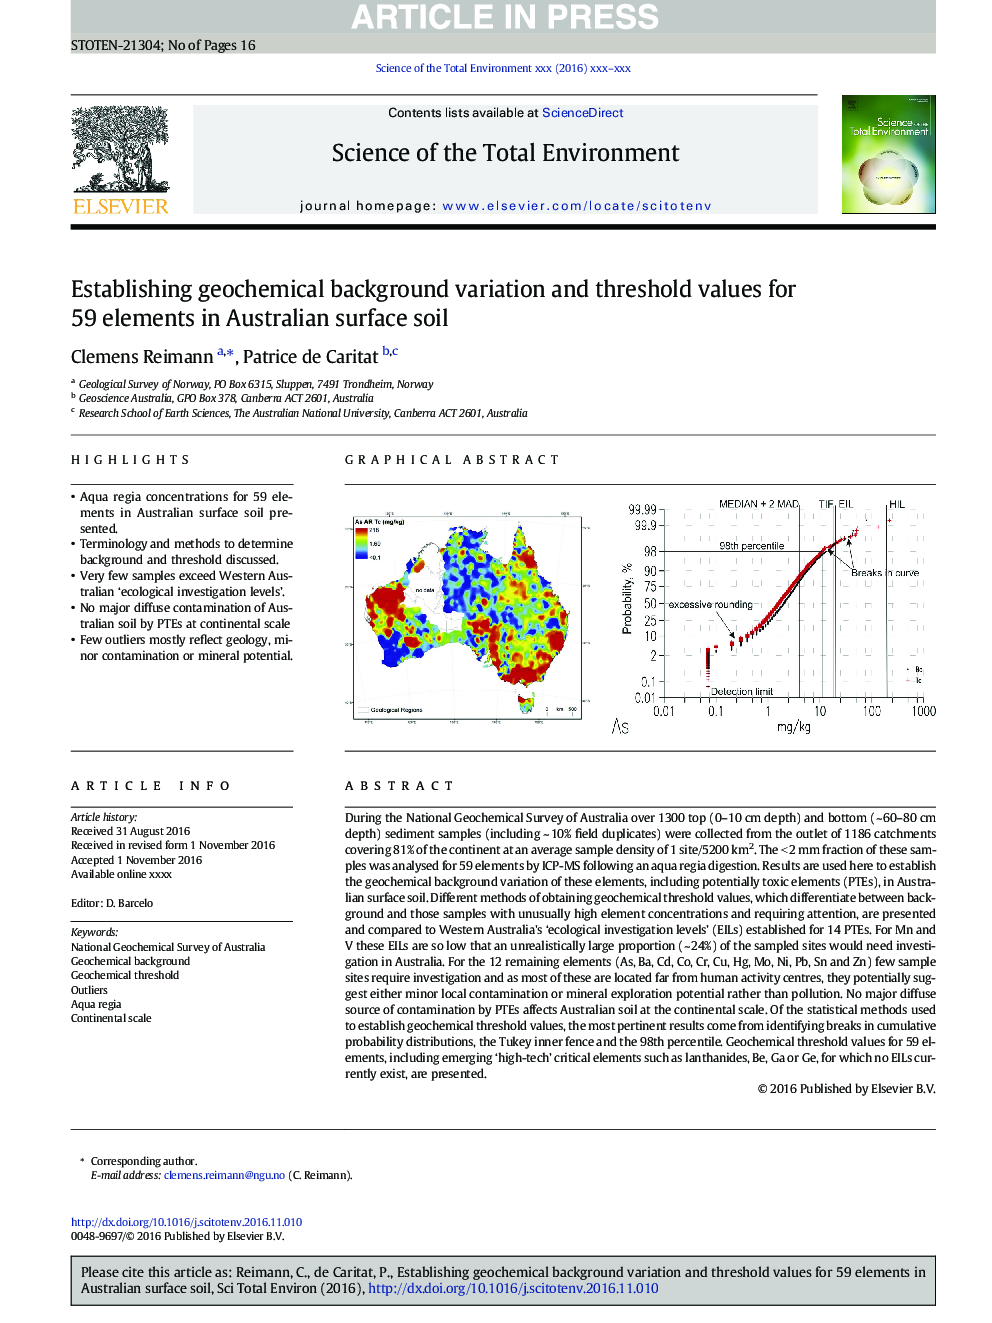 Establishing geochemical background variation and threshold values for 59 elements in Australian surface soil